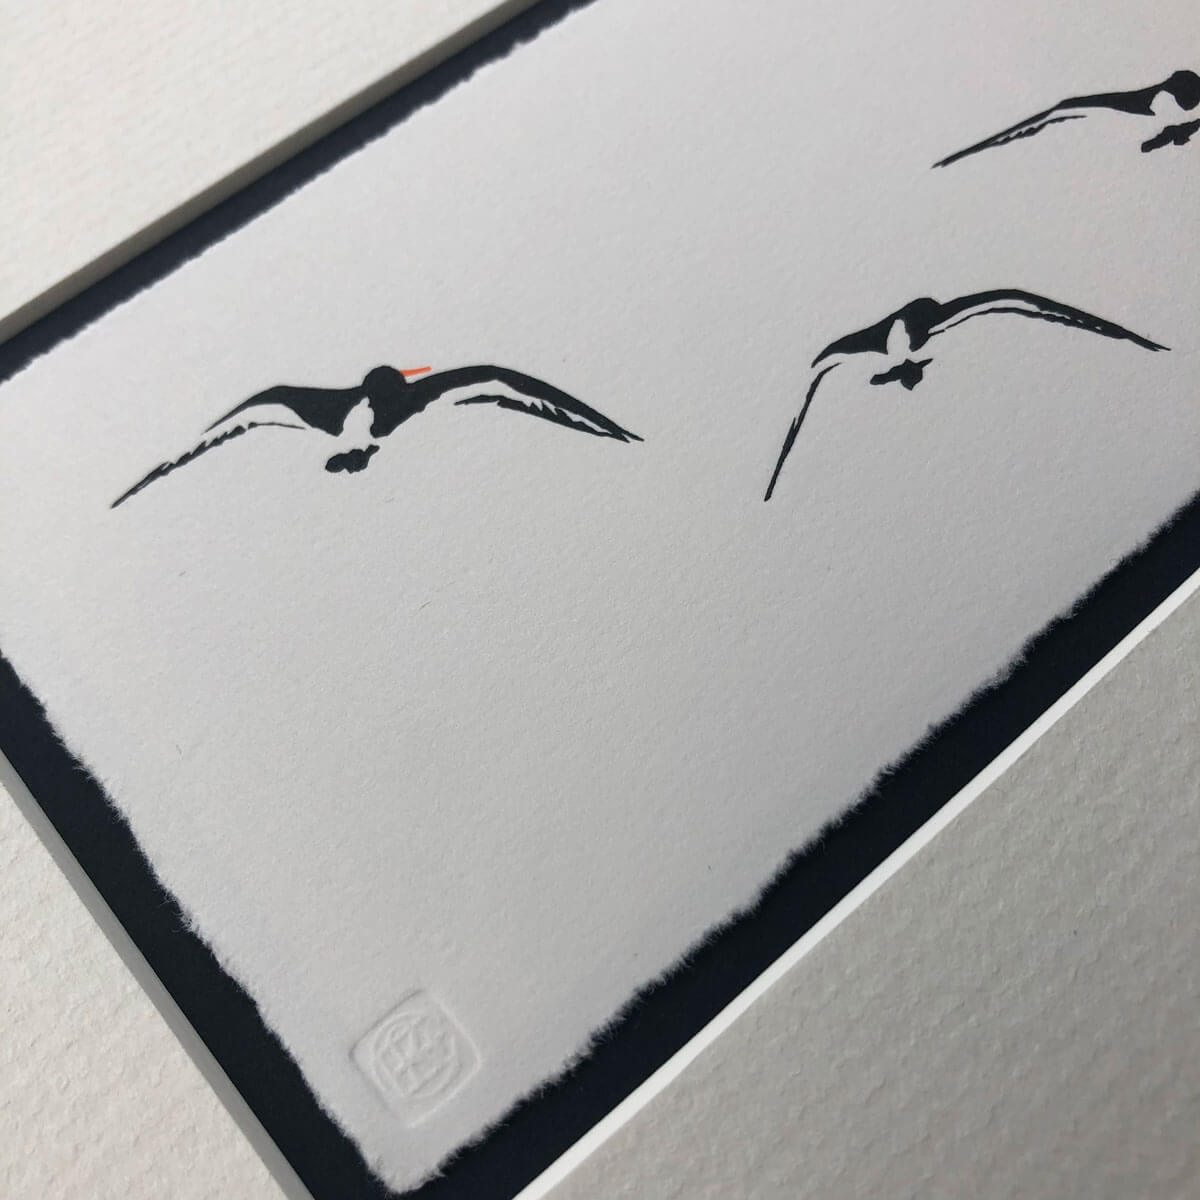 handmade linocut print of black and white oyster catcher birds in flight against unprinted plain white background